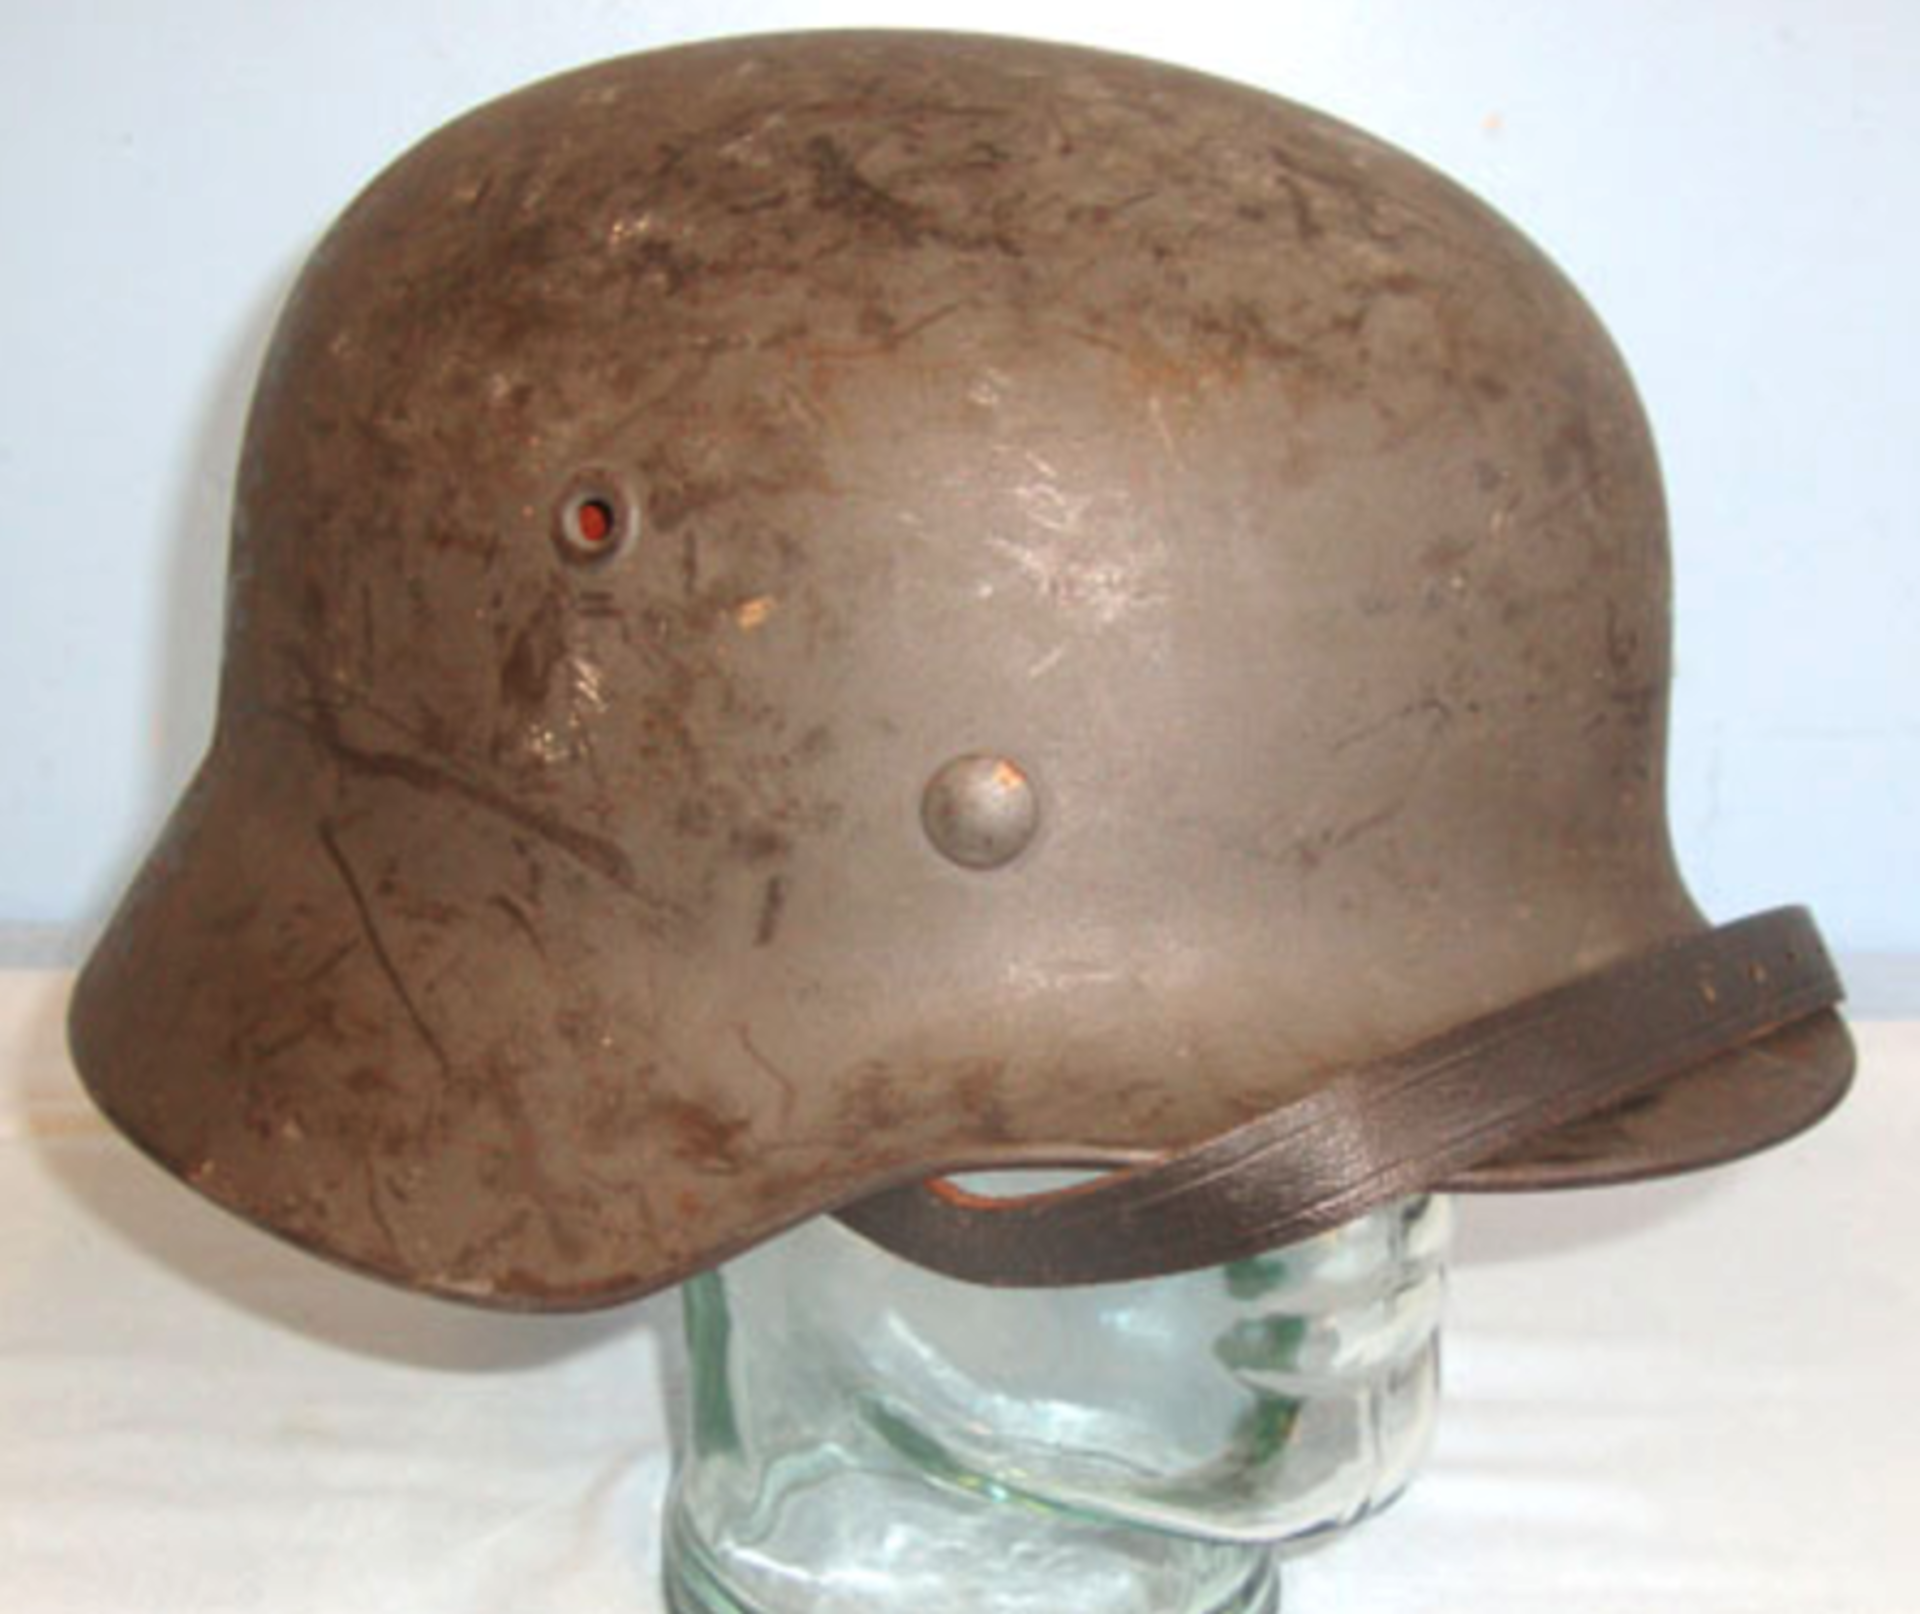 ORIGINAL, WW2 Nazi German Single Luftwaffe Decal M40 Combat Helmet By ‘Q’ (Quist) - Image 2 of 3